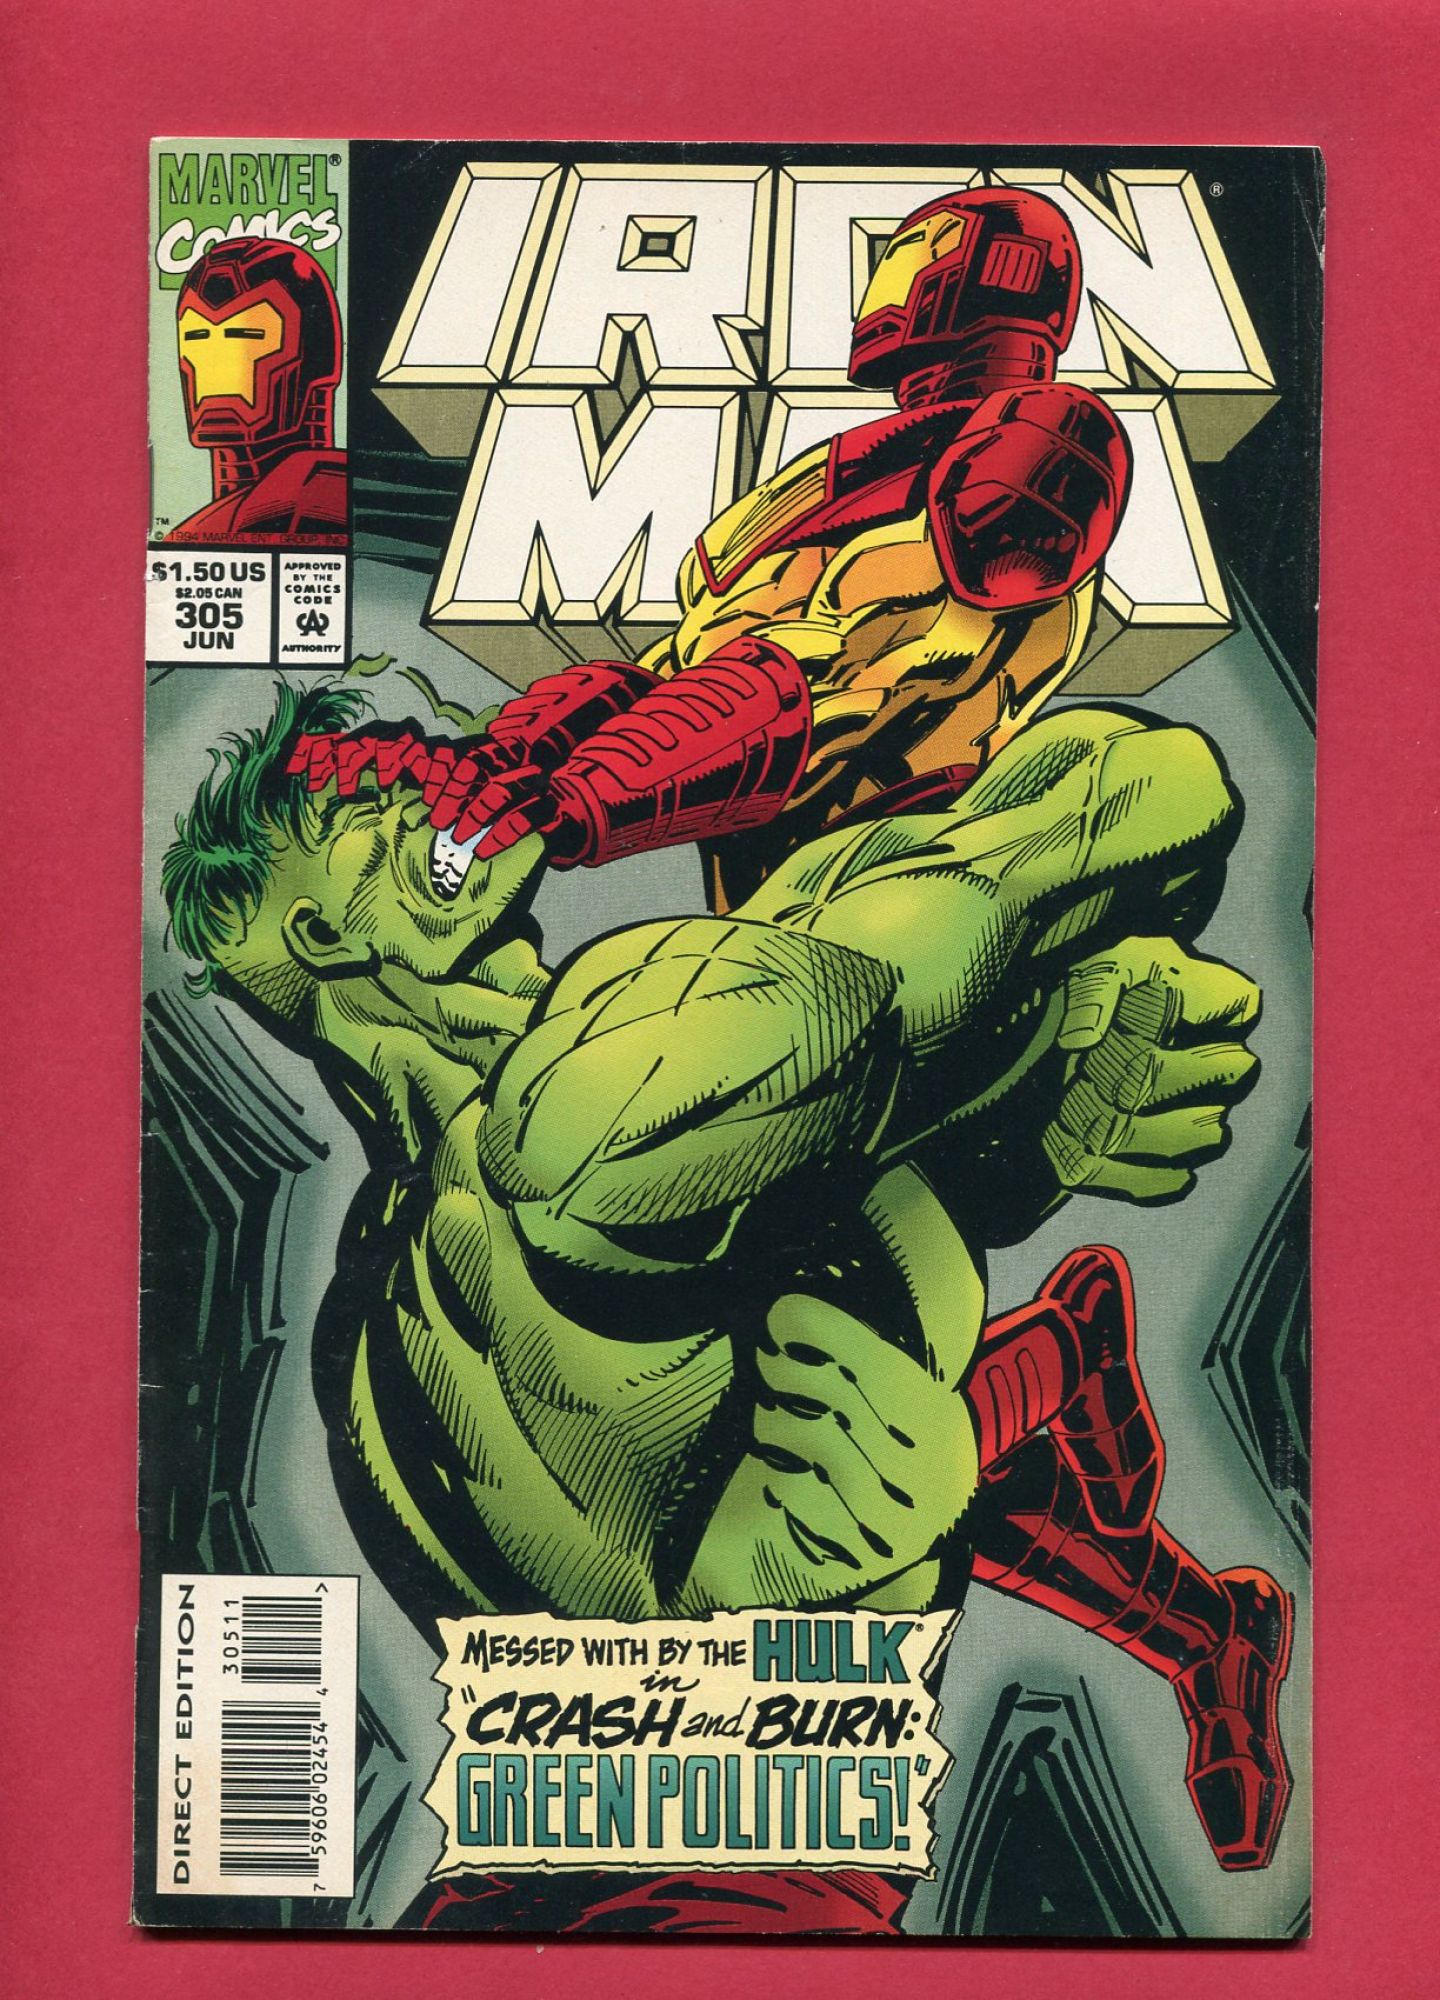 Iron Man #305, Jun 1994, 7.5 VF-